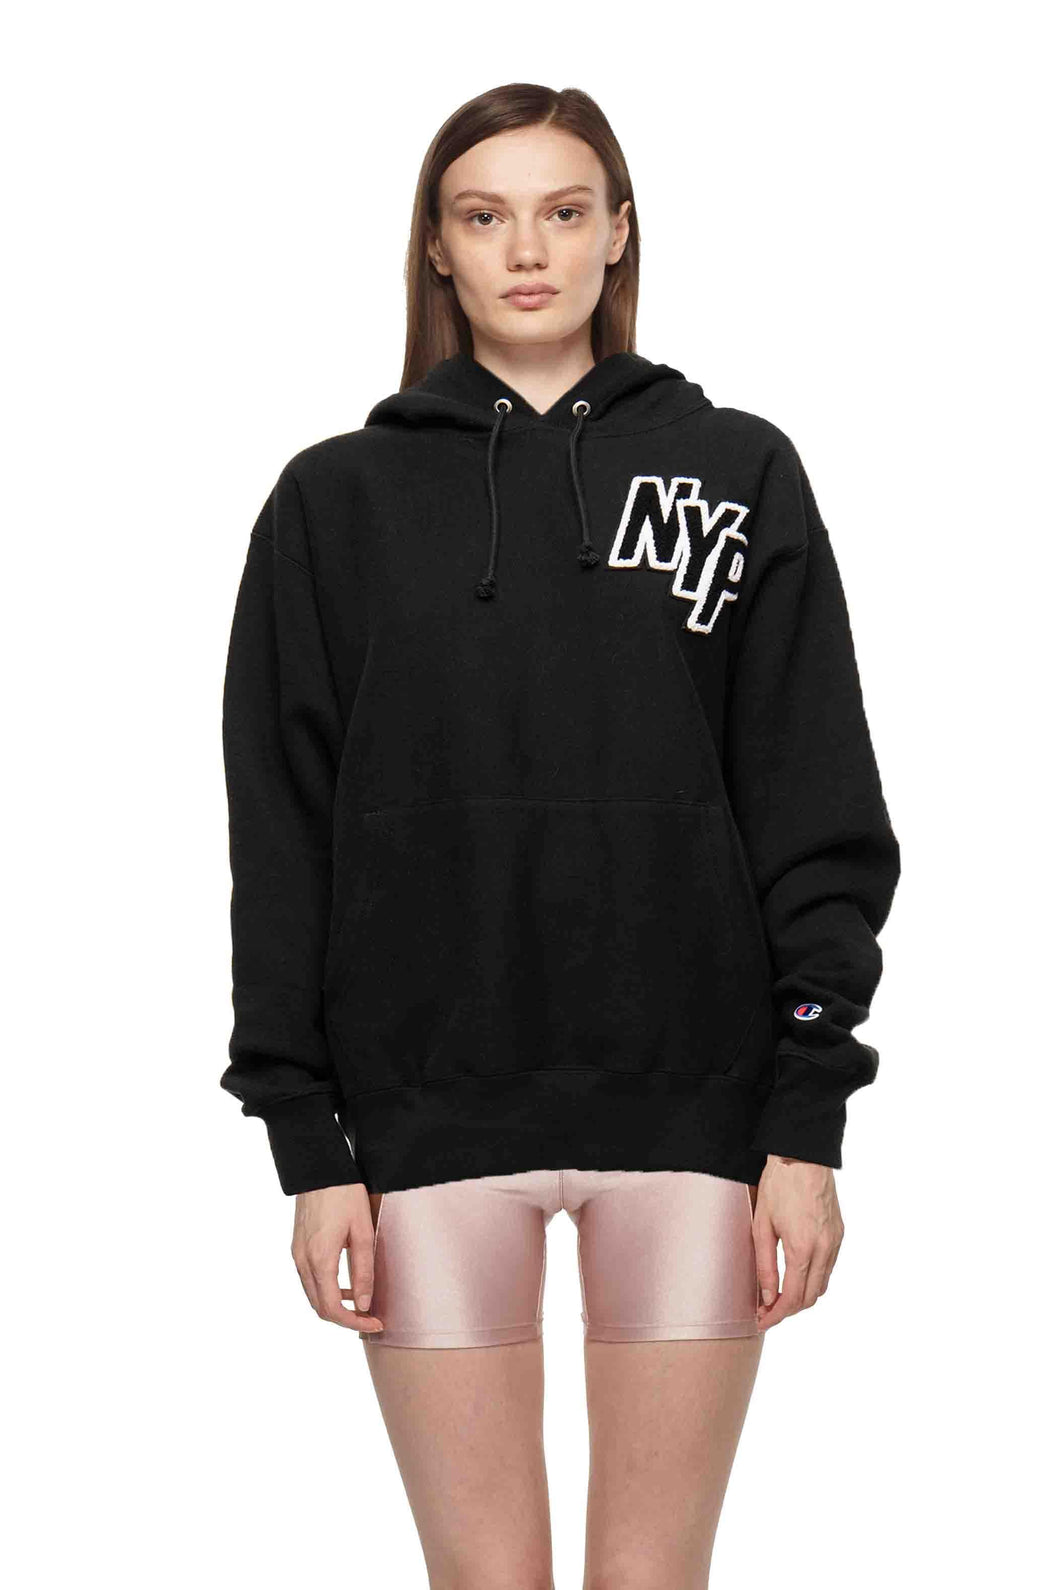 NYP Patch Sweatshirt - New York Pilates